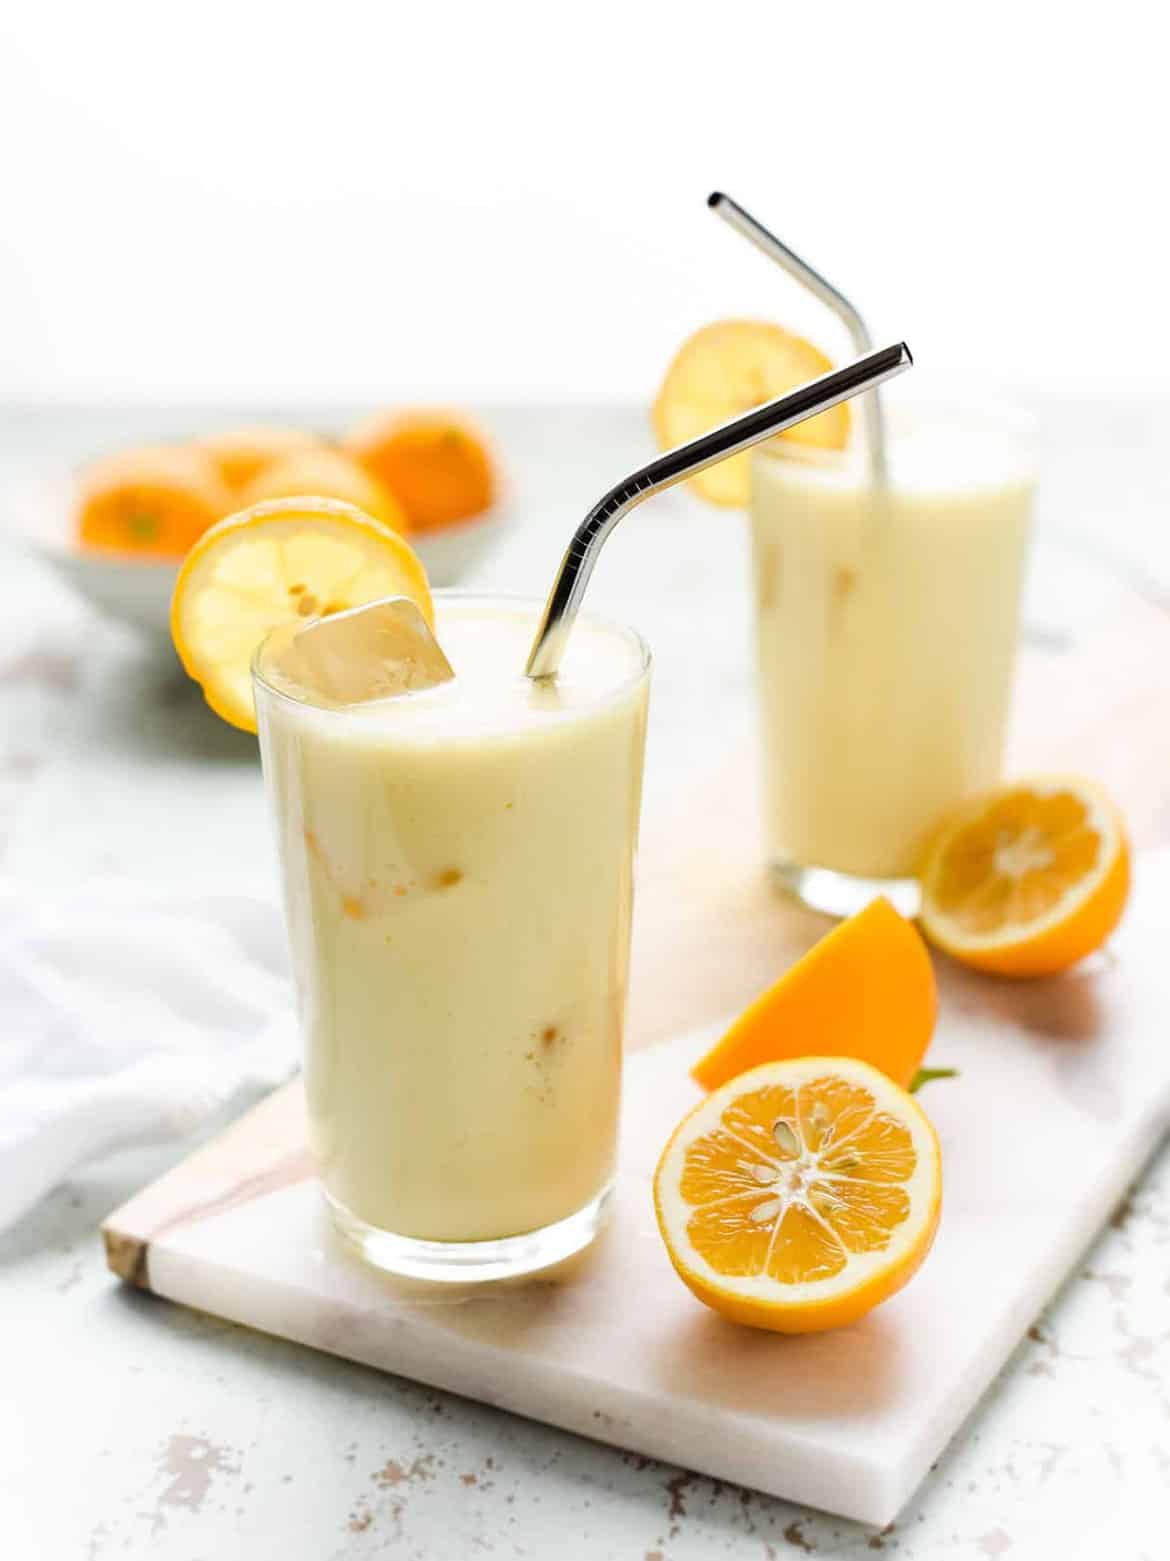 Meyer Lemon Honey Lassi in glasses with metal straws and halved oranges